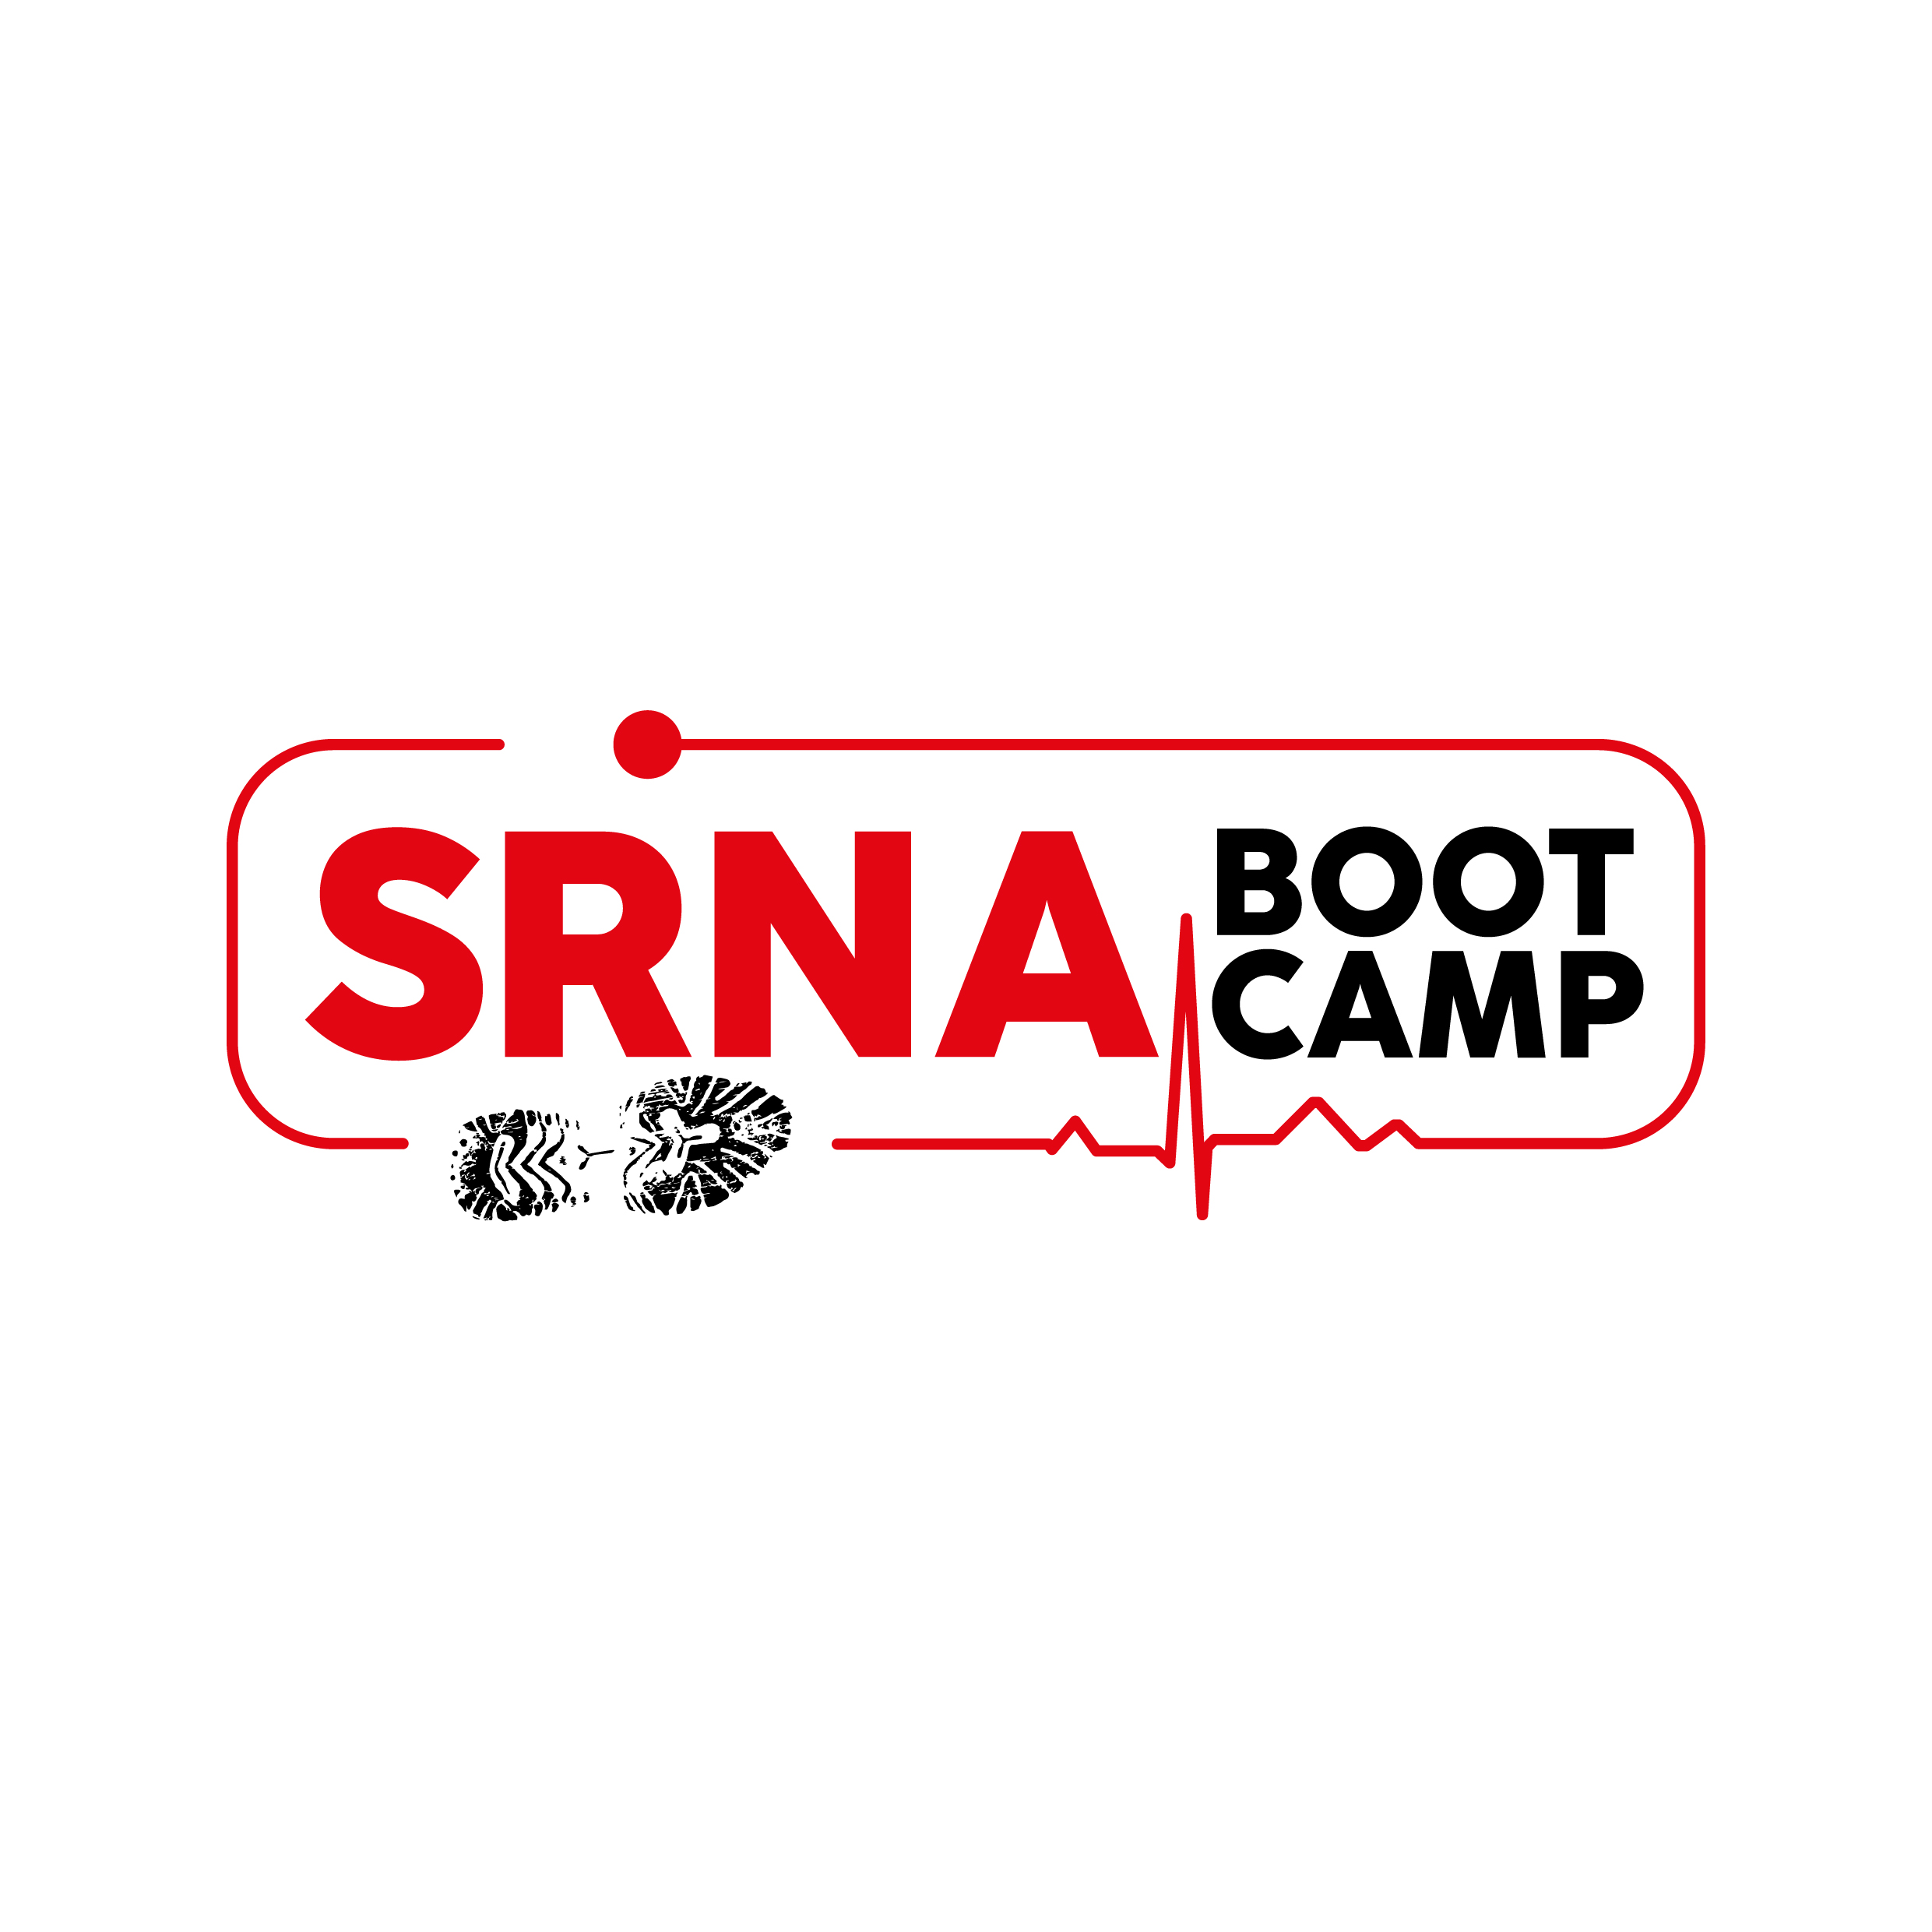 SRNA BOOT CAMP - OKEY_SRNA - 3